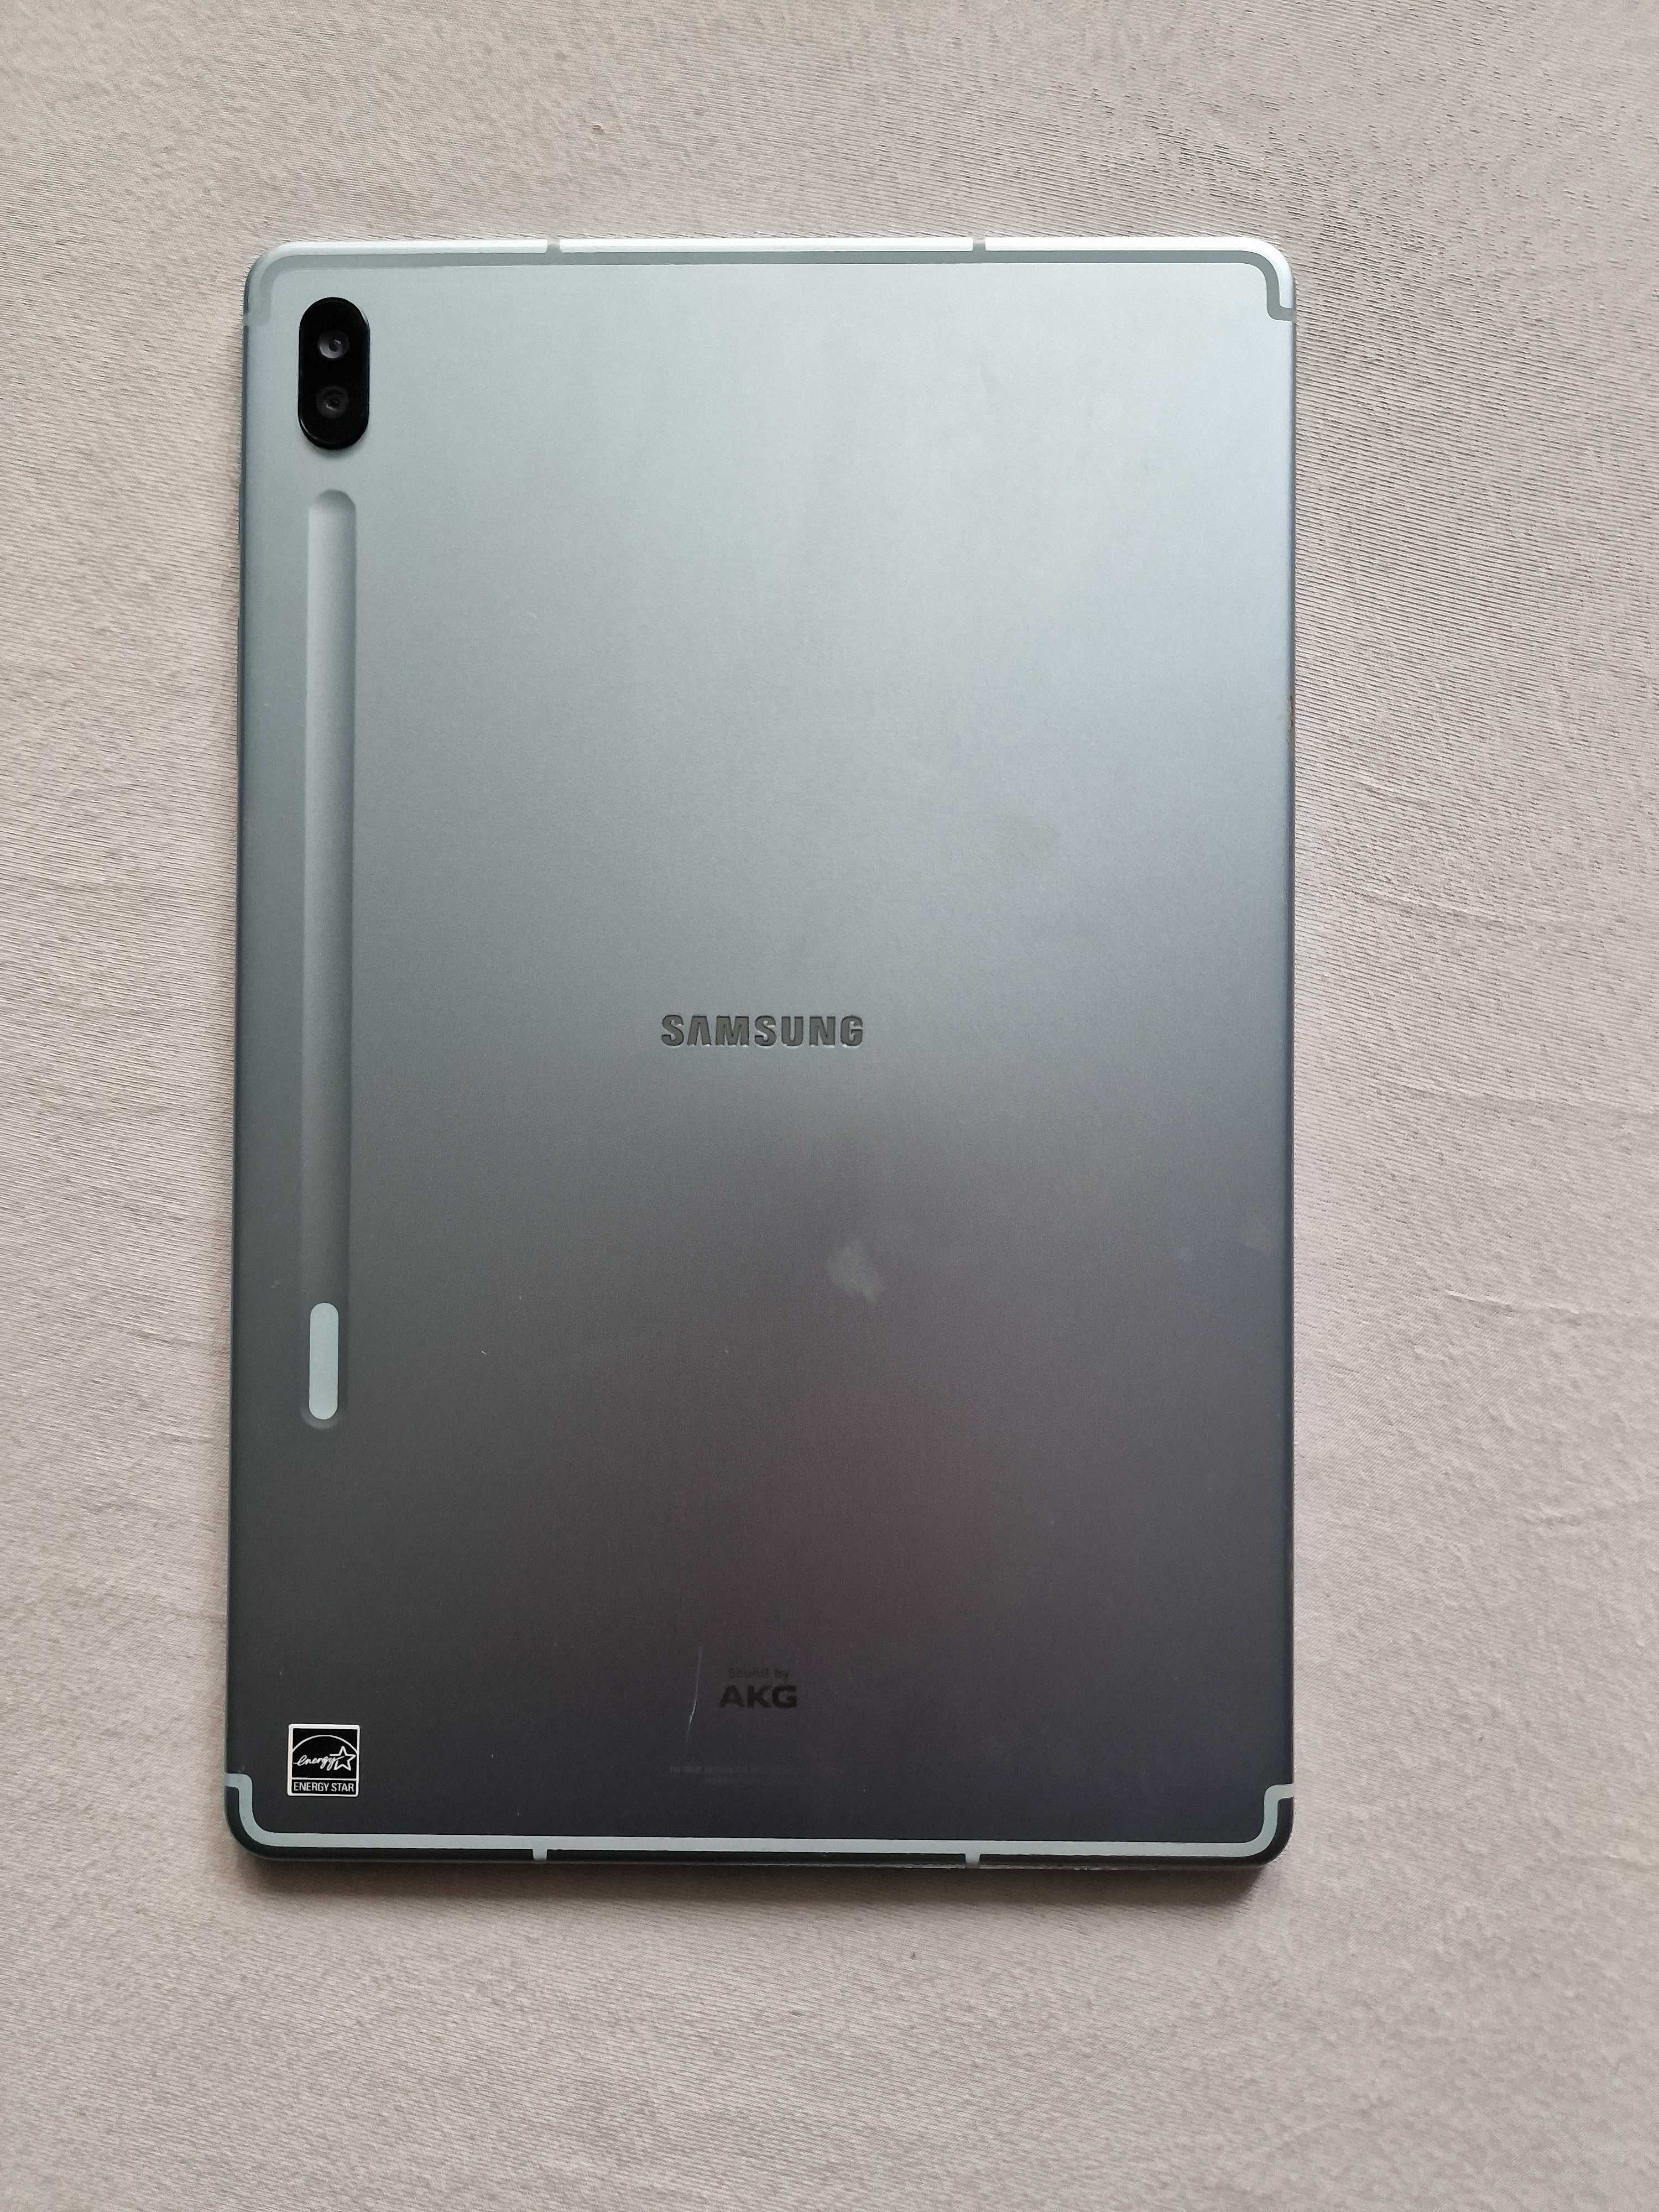 Samsung Galaxy Tab S6 10.5" 6/128GB SM-T860 WiFi Blue планшет Android